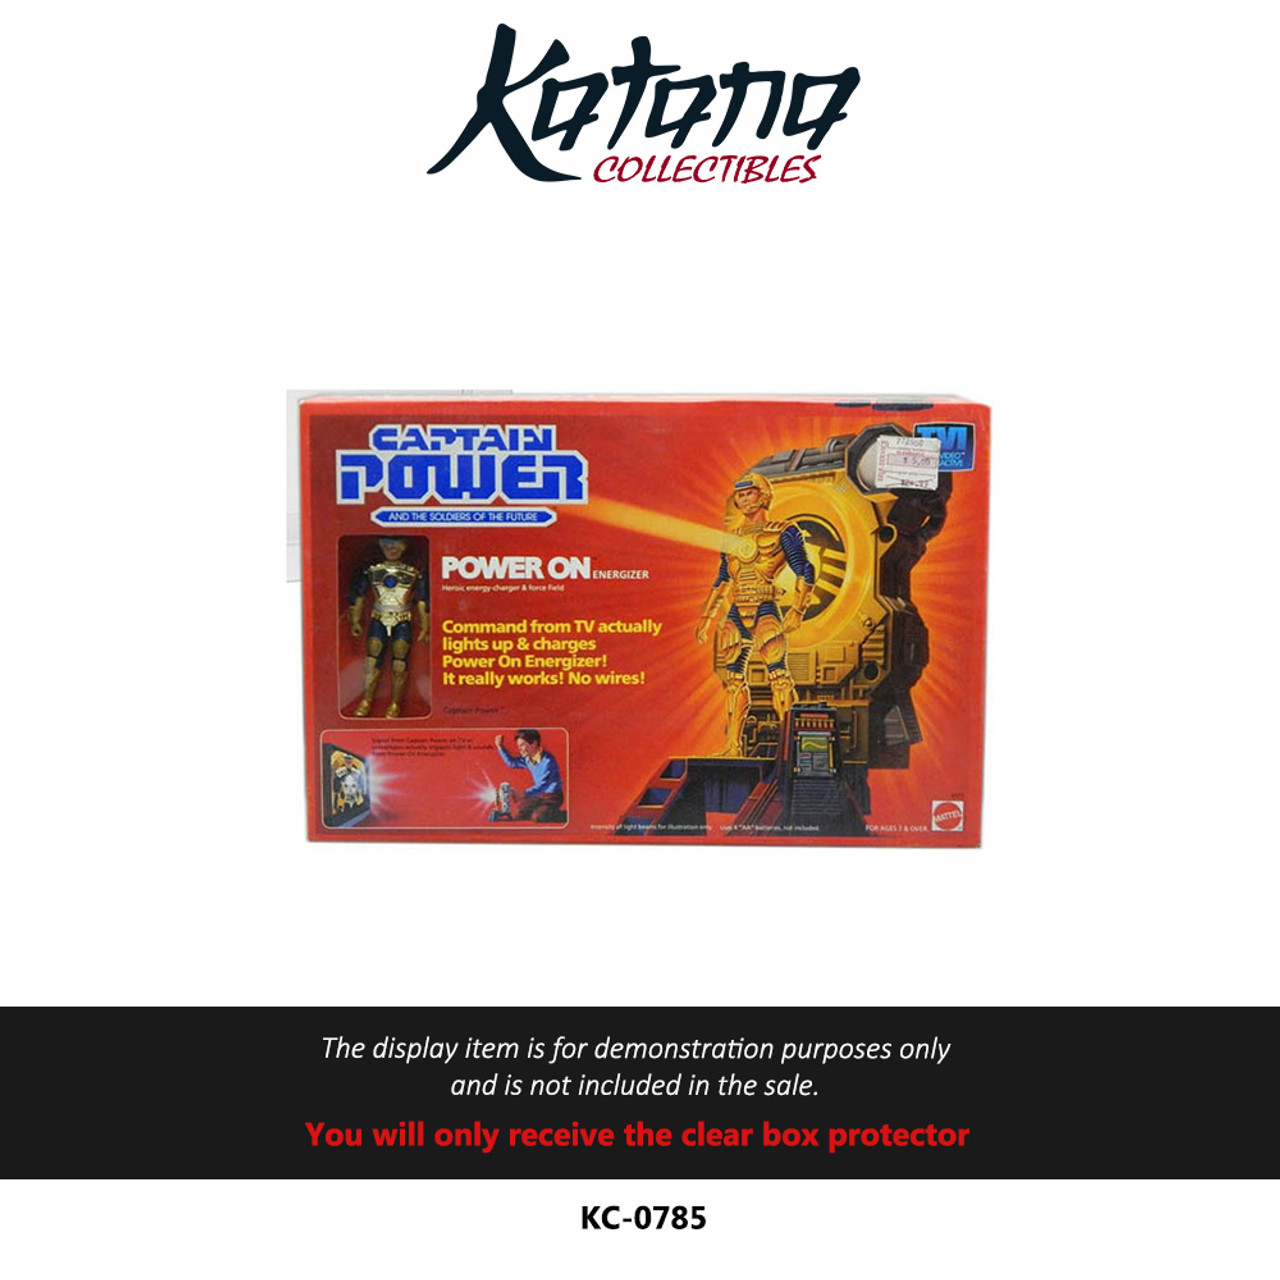 Katana Collectibles Protector For Vintage 1987 Mattel Captain Power Playset